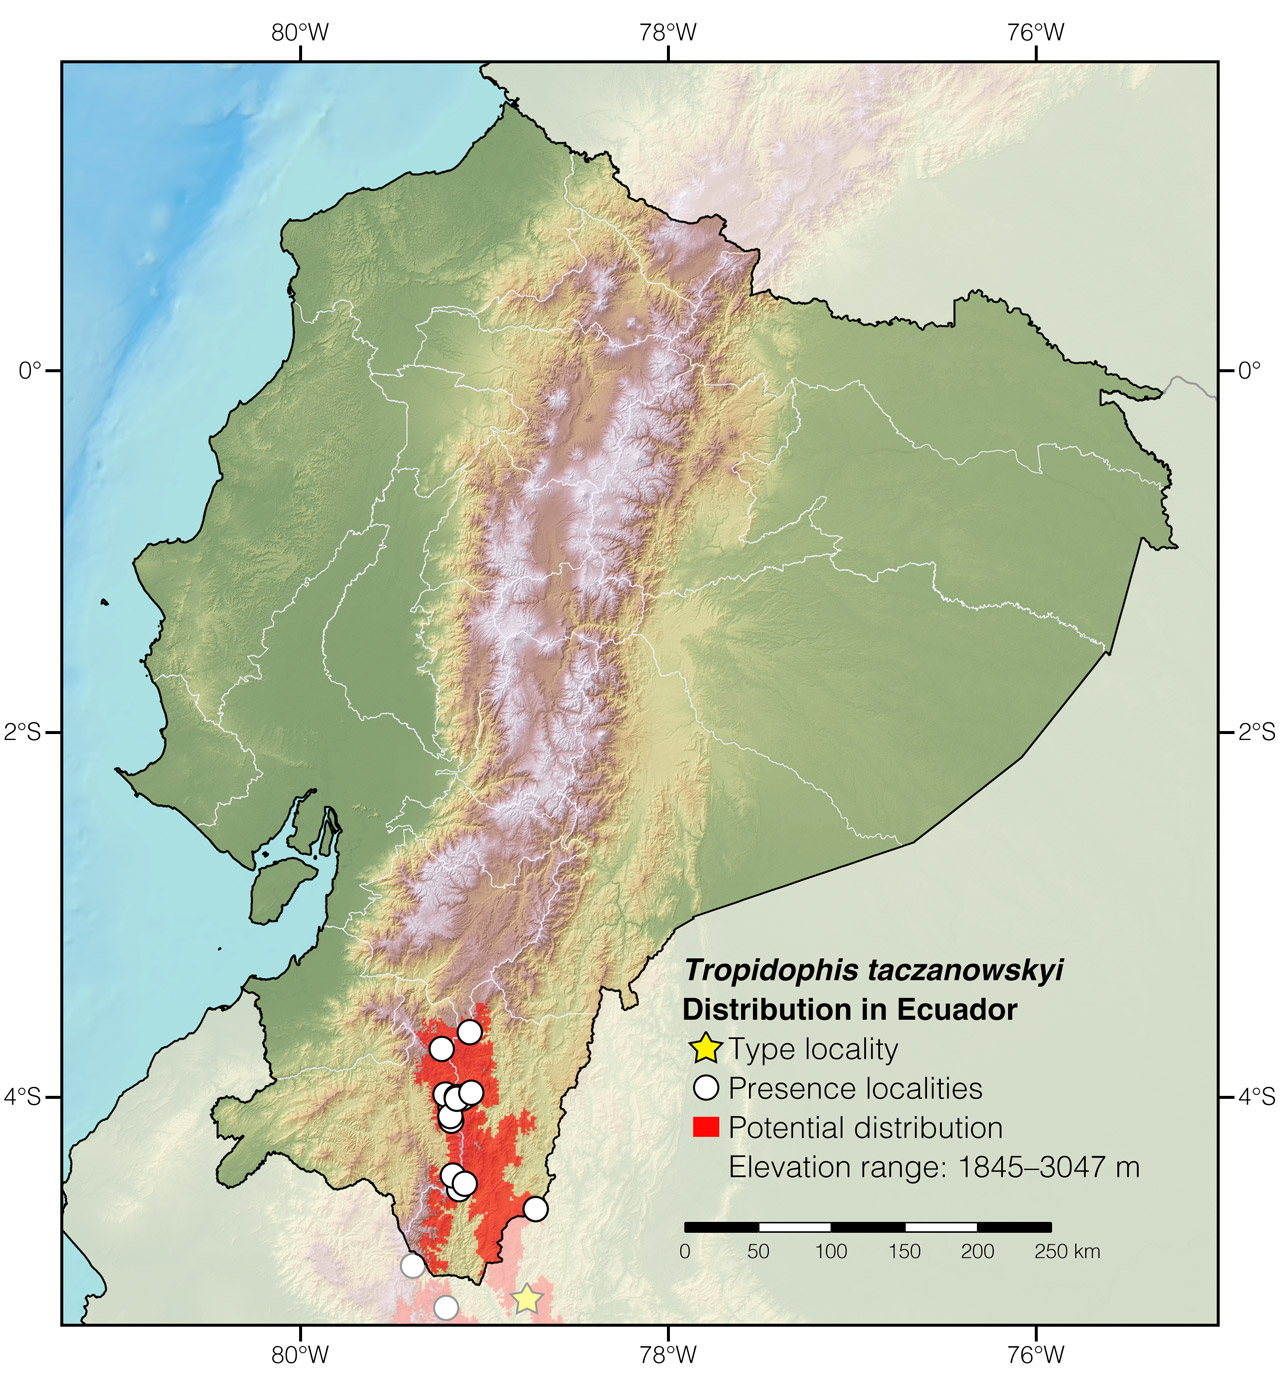 Distribution of Tropidophis taczanowskyi in Ecuador